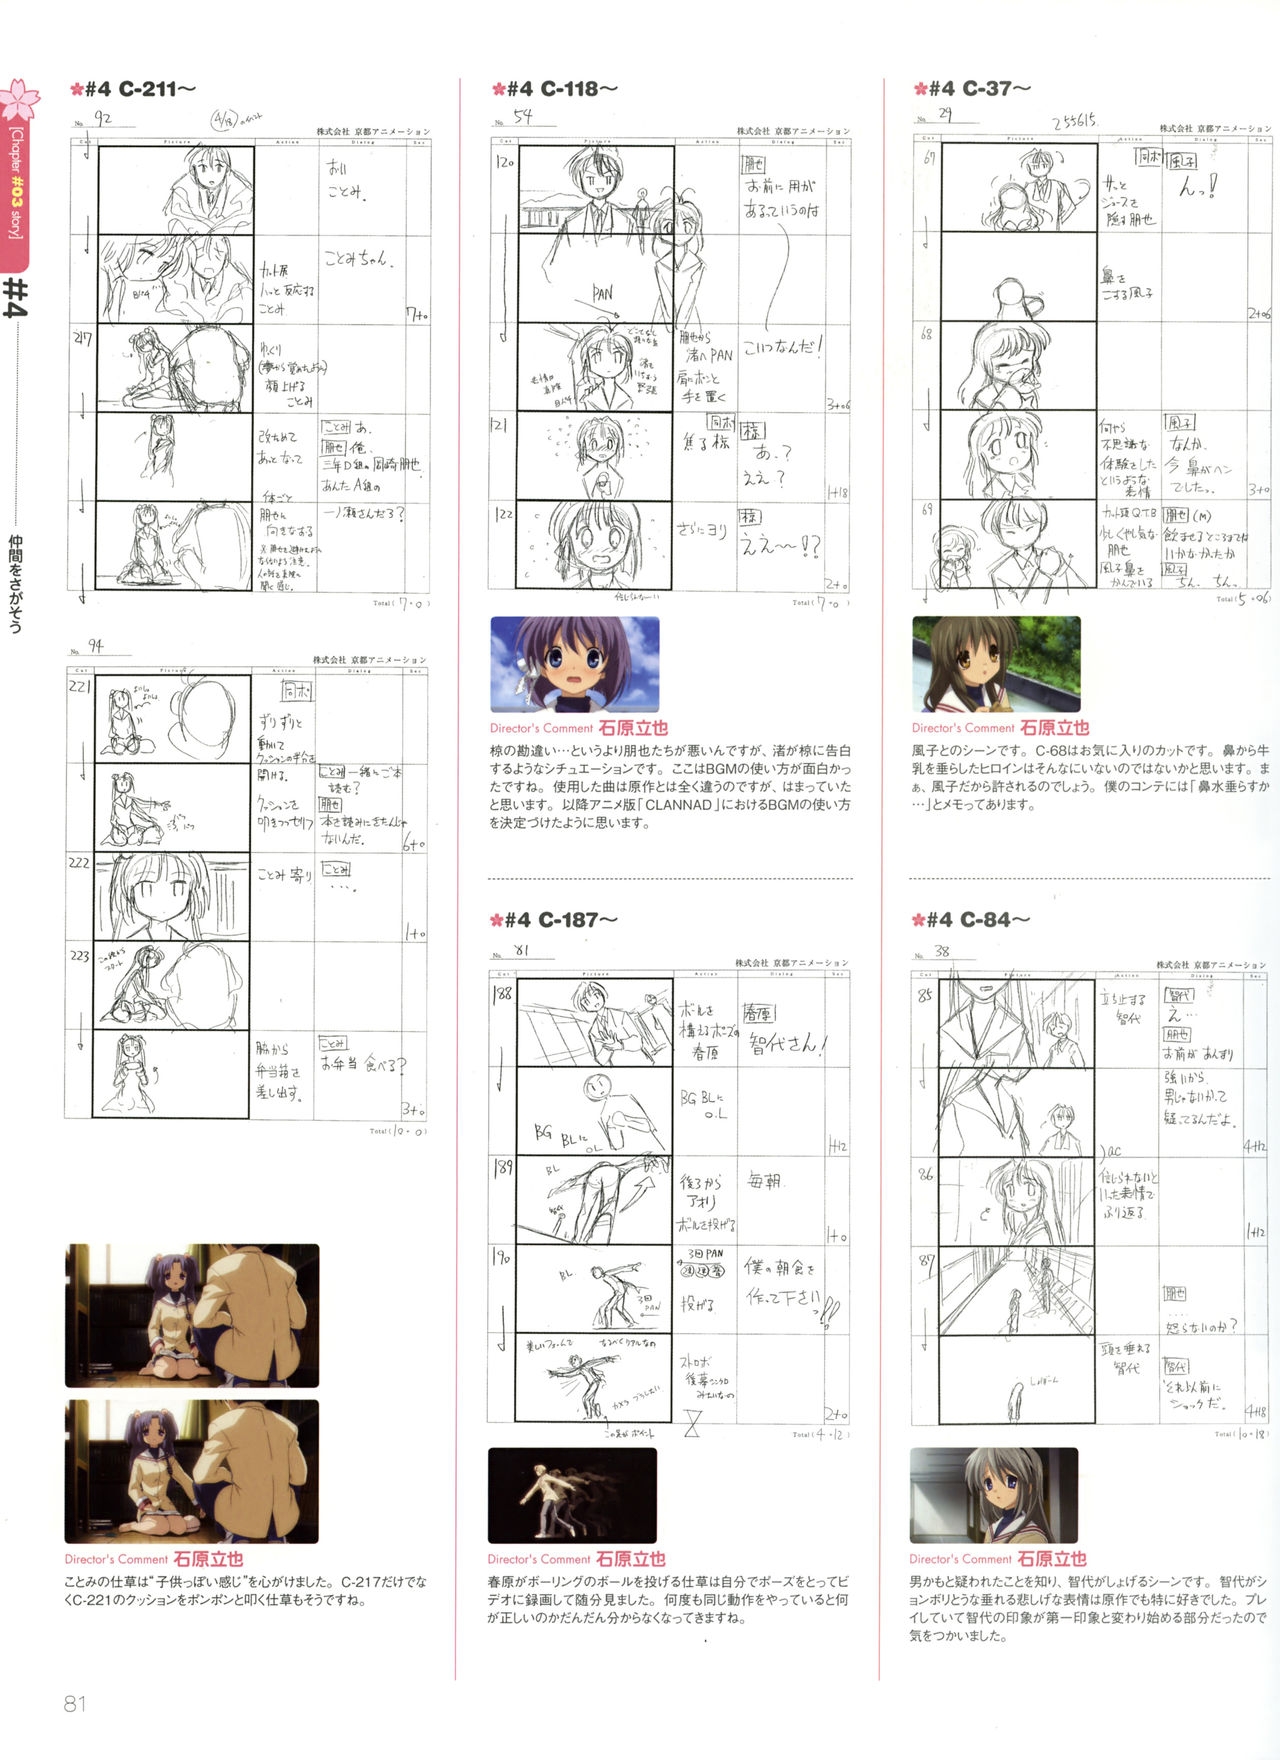 Clannad TV Animation Visual Fan Book 84